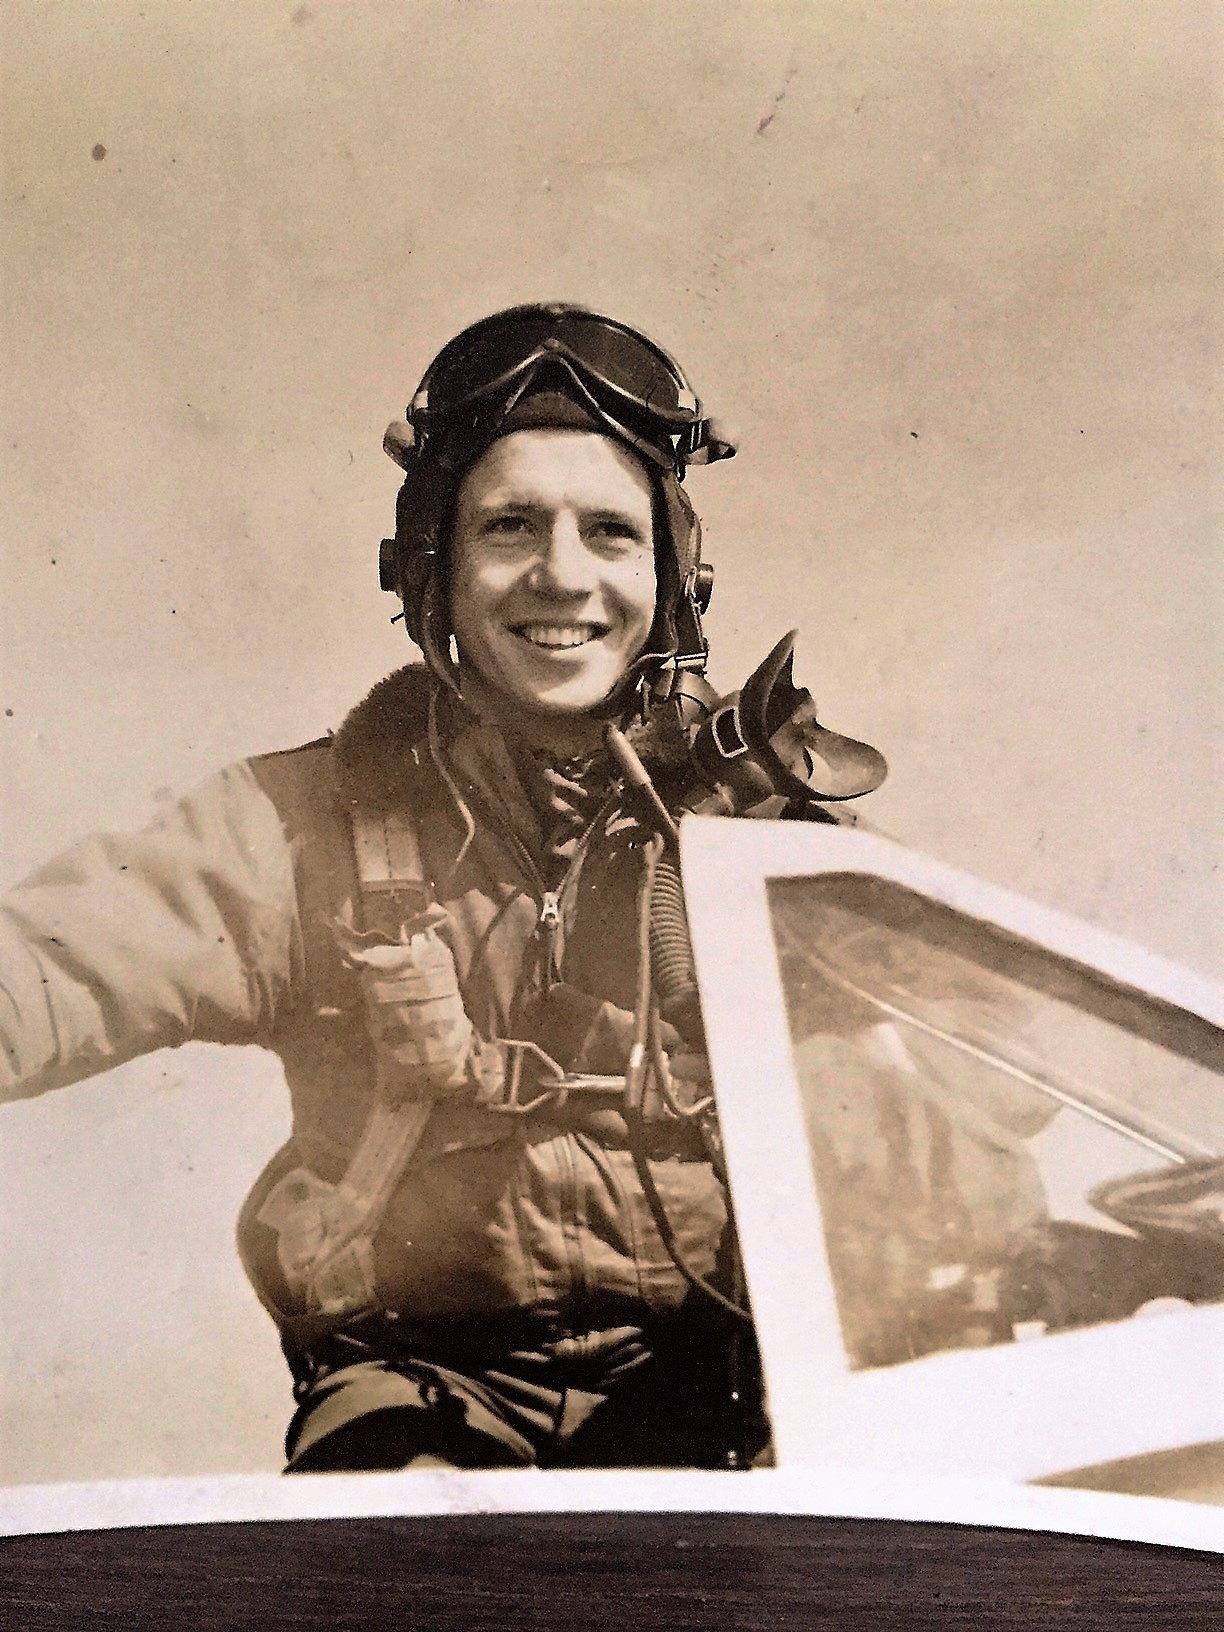 Howard Spencer during World War II